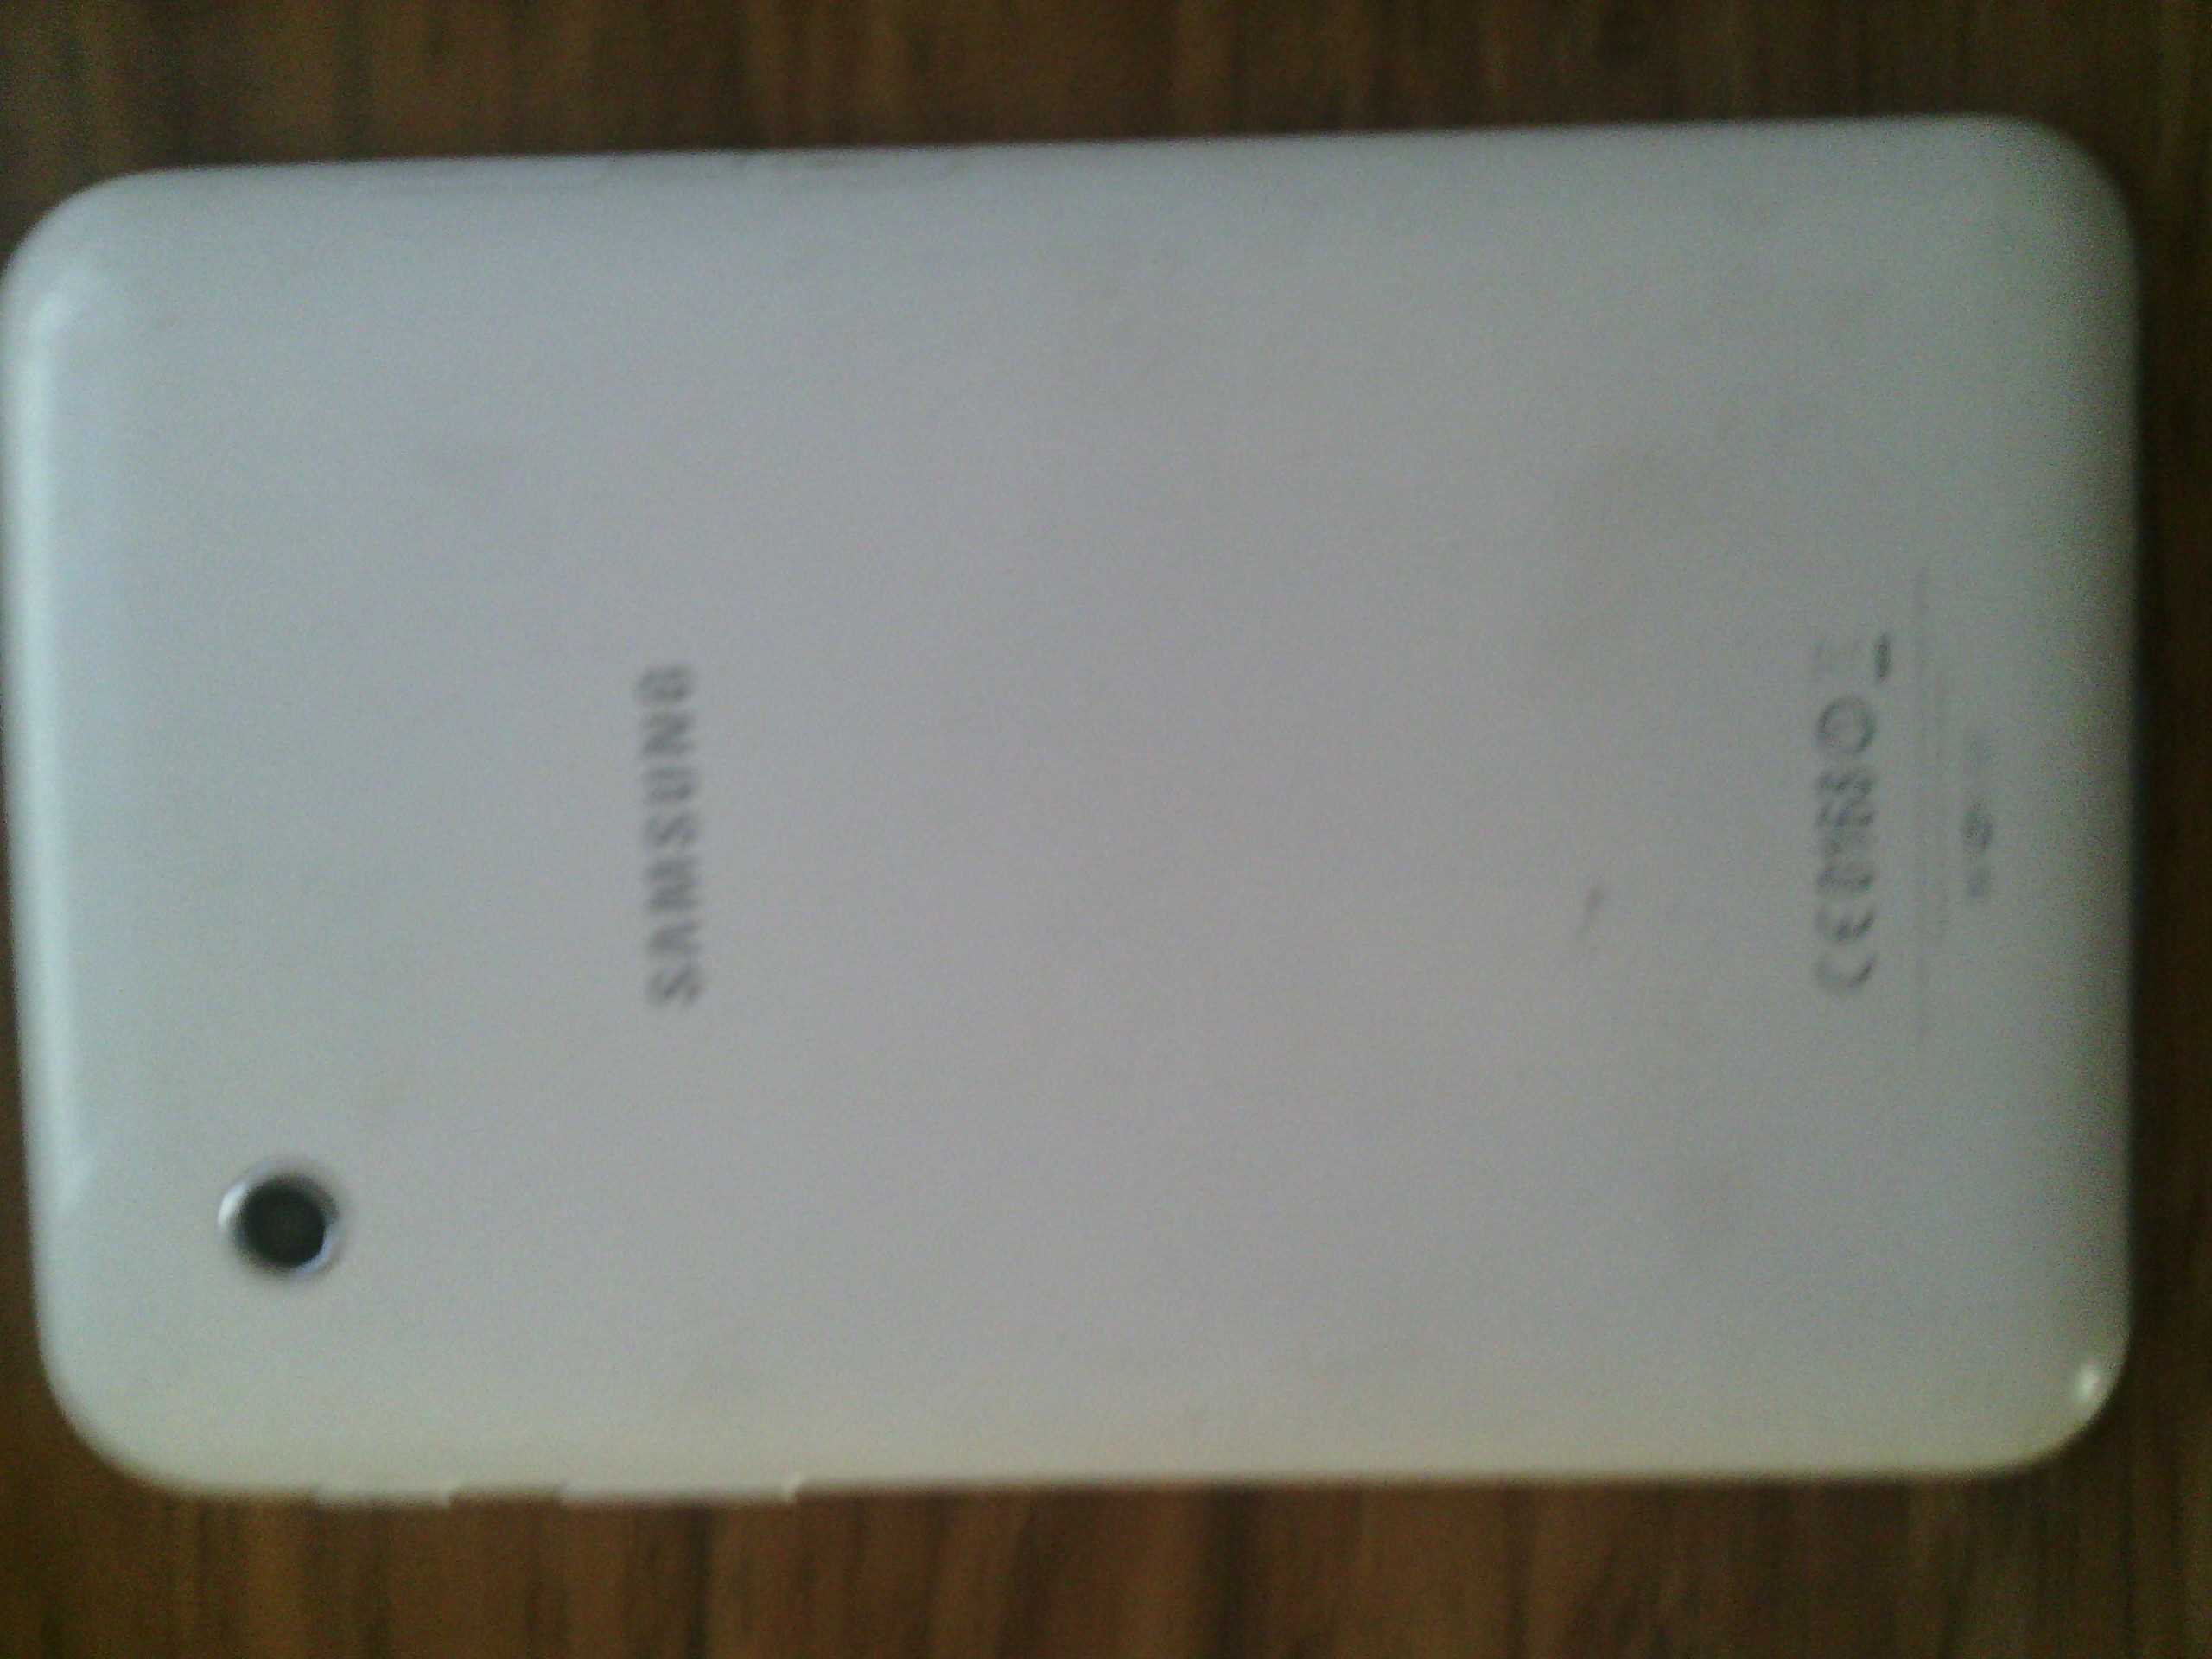 	Samsung galaxi tab 2.7.0